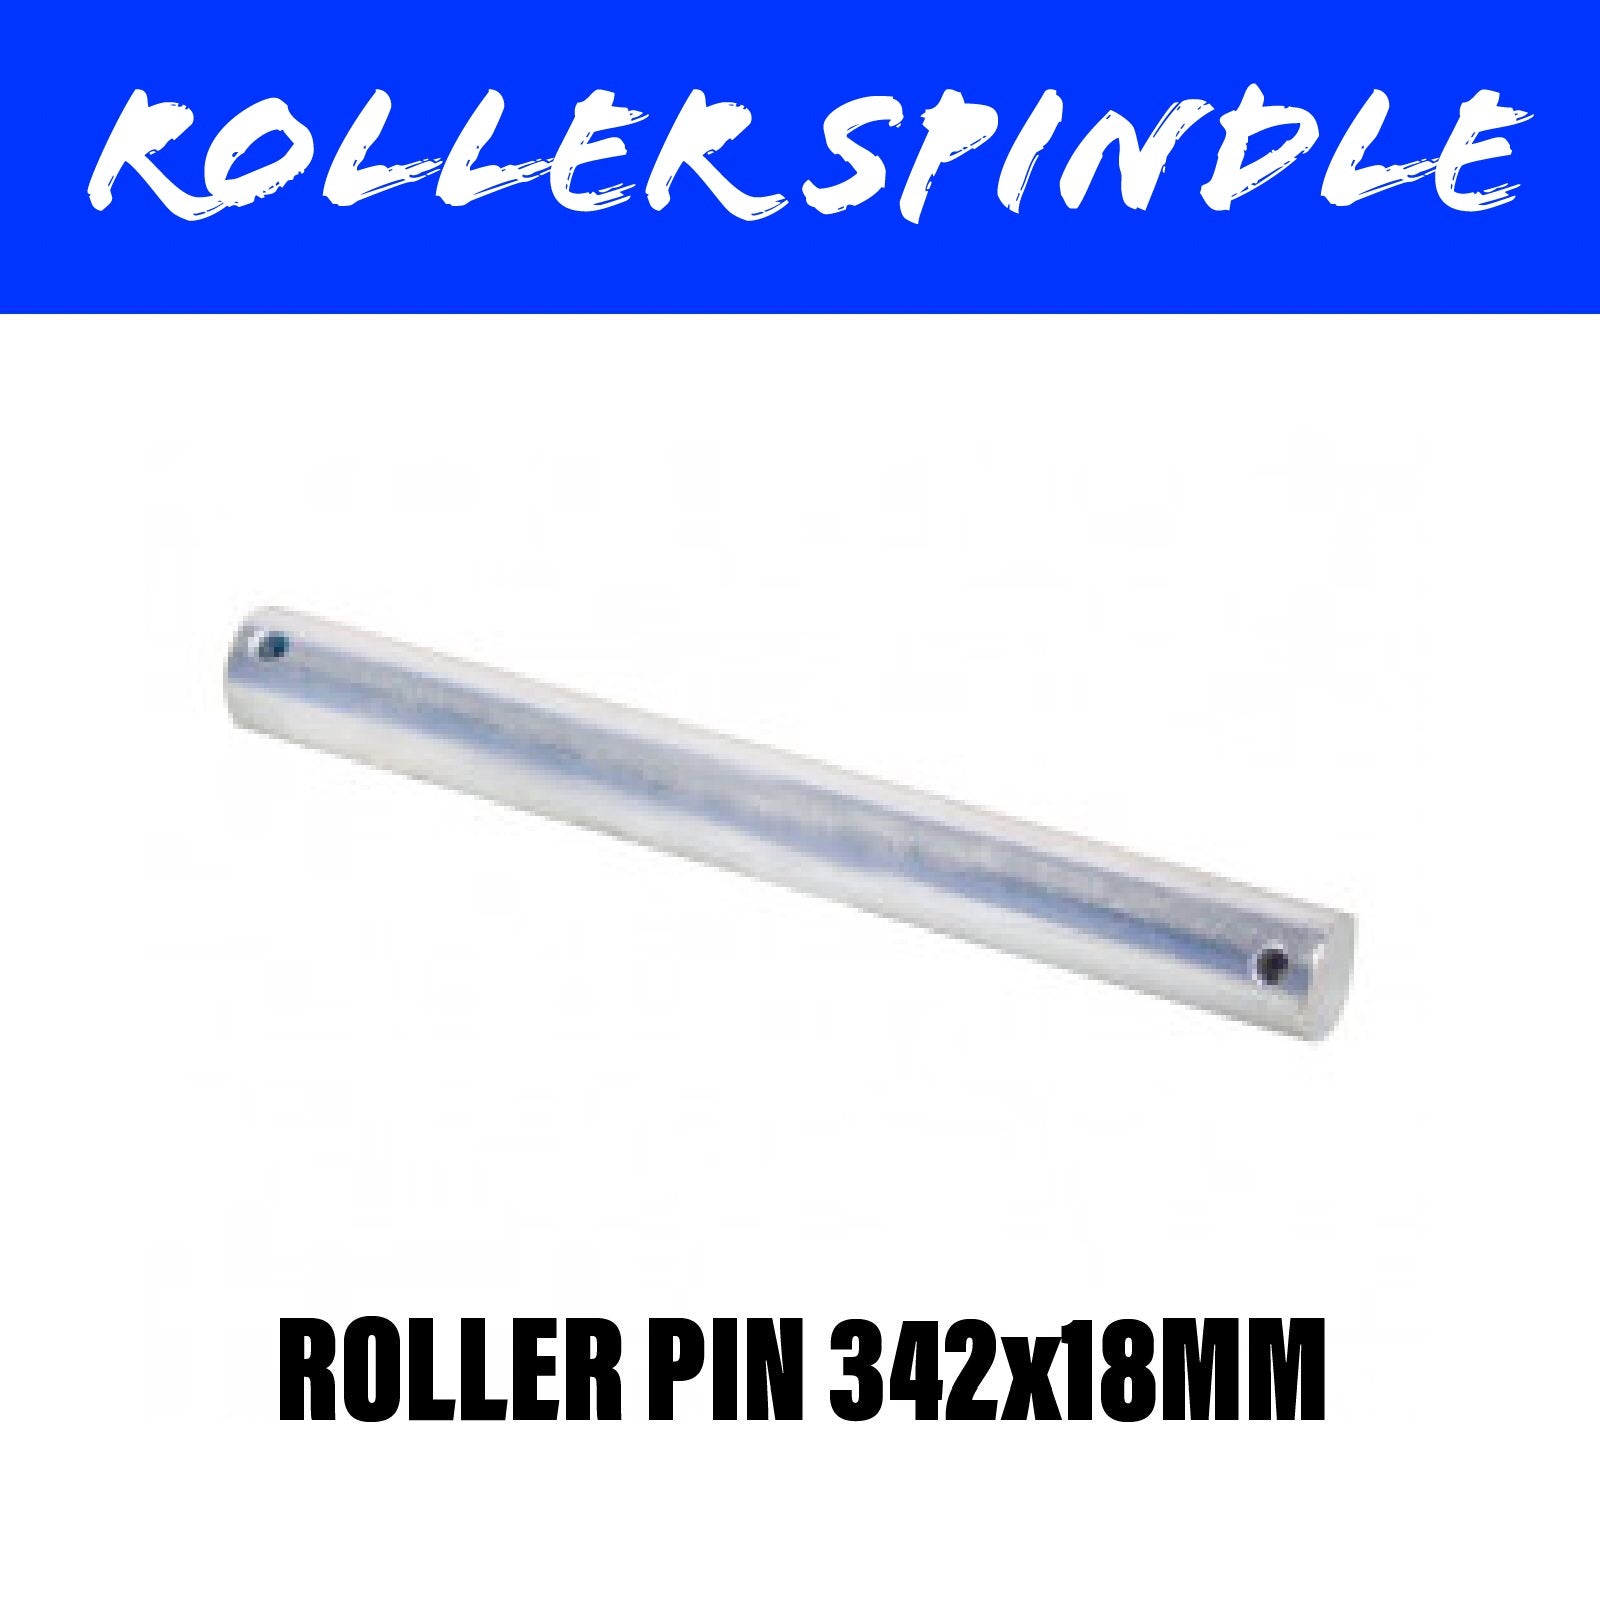 342X18MM Roller Pin